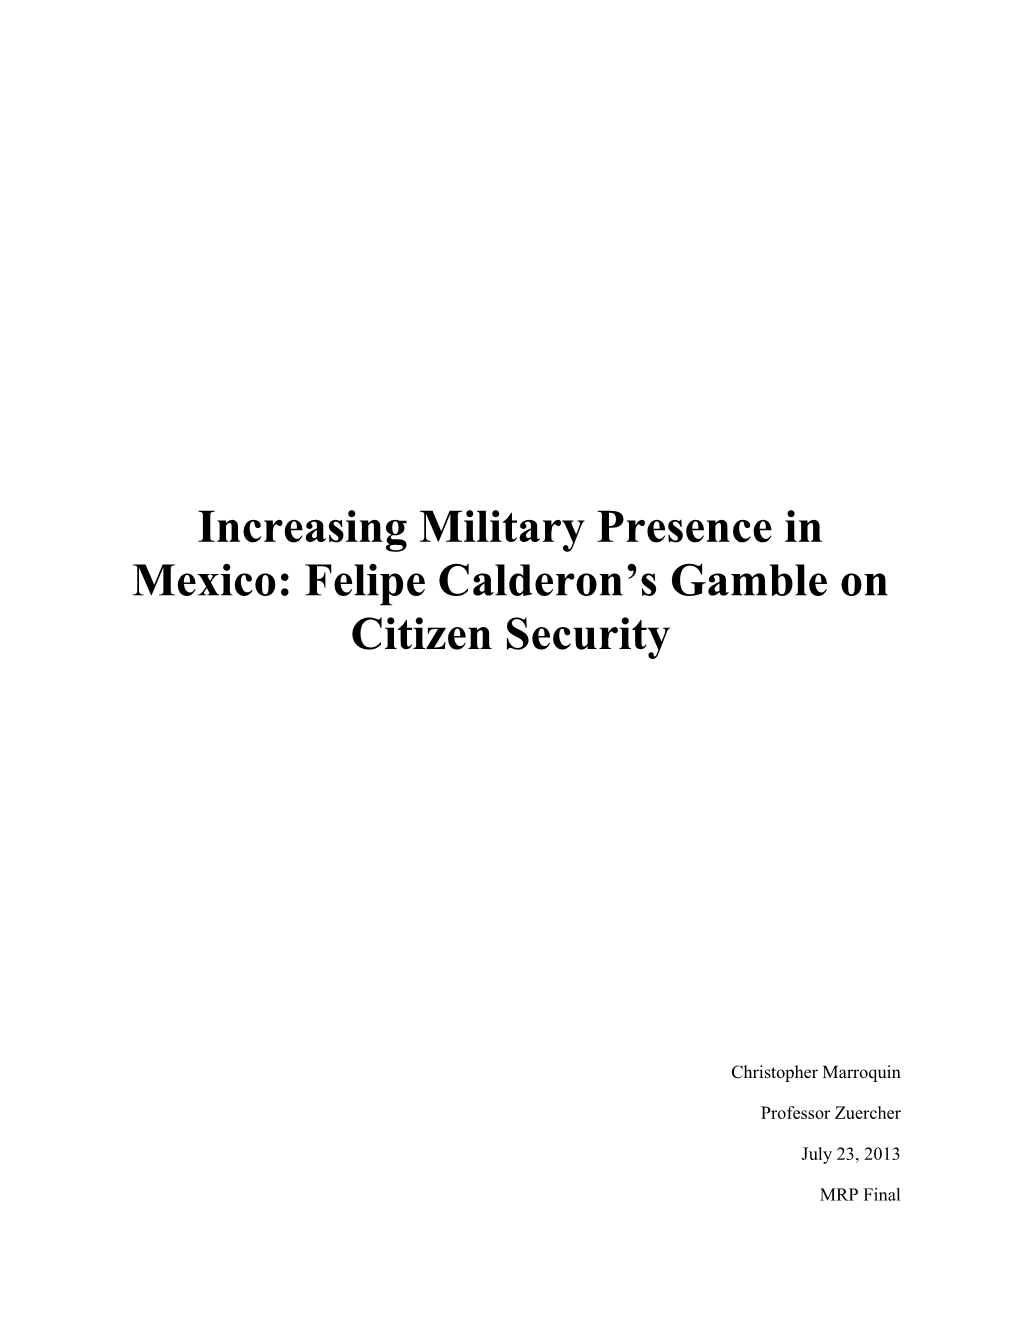 Increasing Military Presence in Mexico: Felipe Calderon’S Gamble on Citizen Security